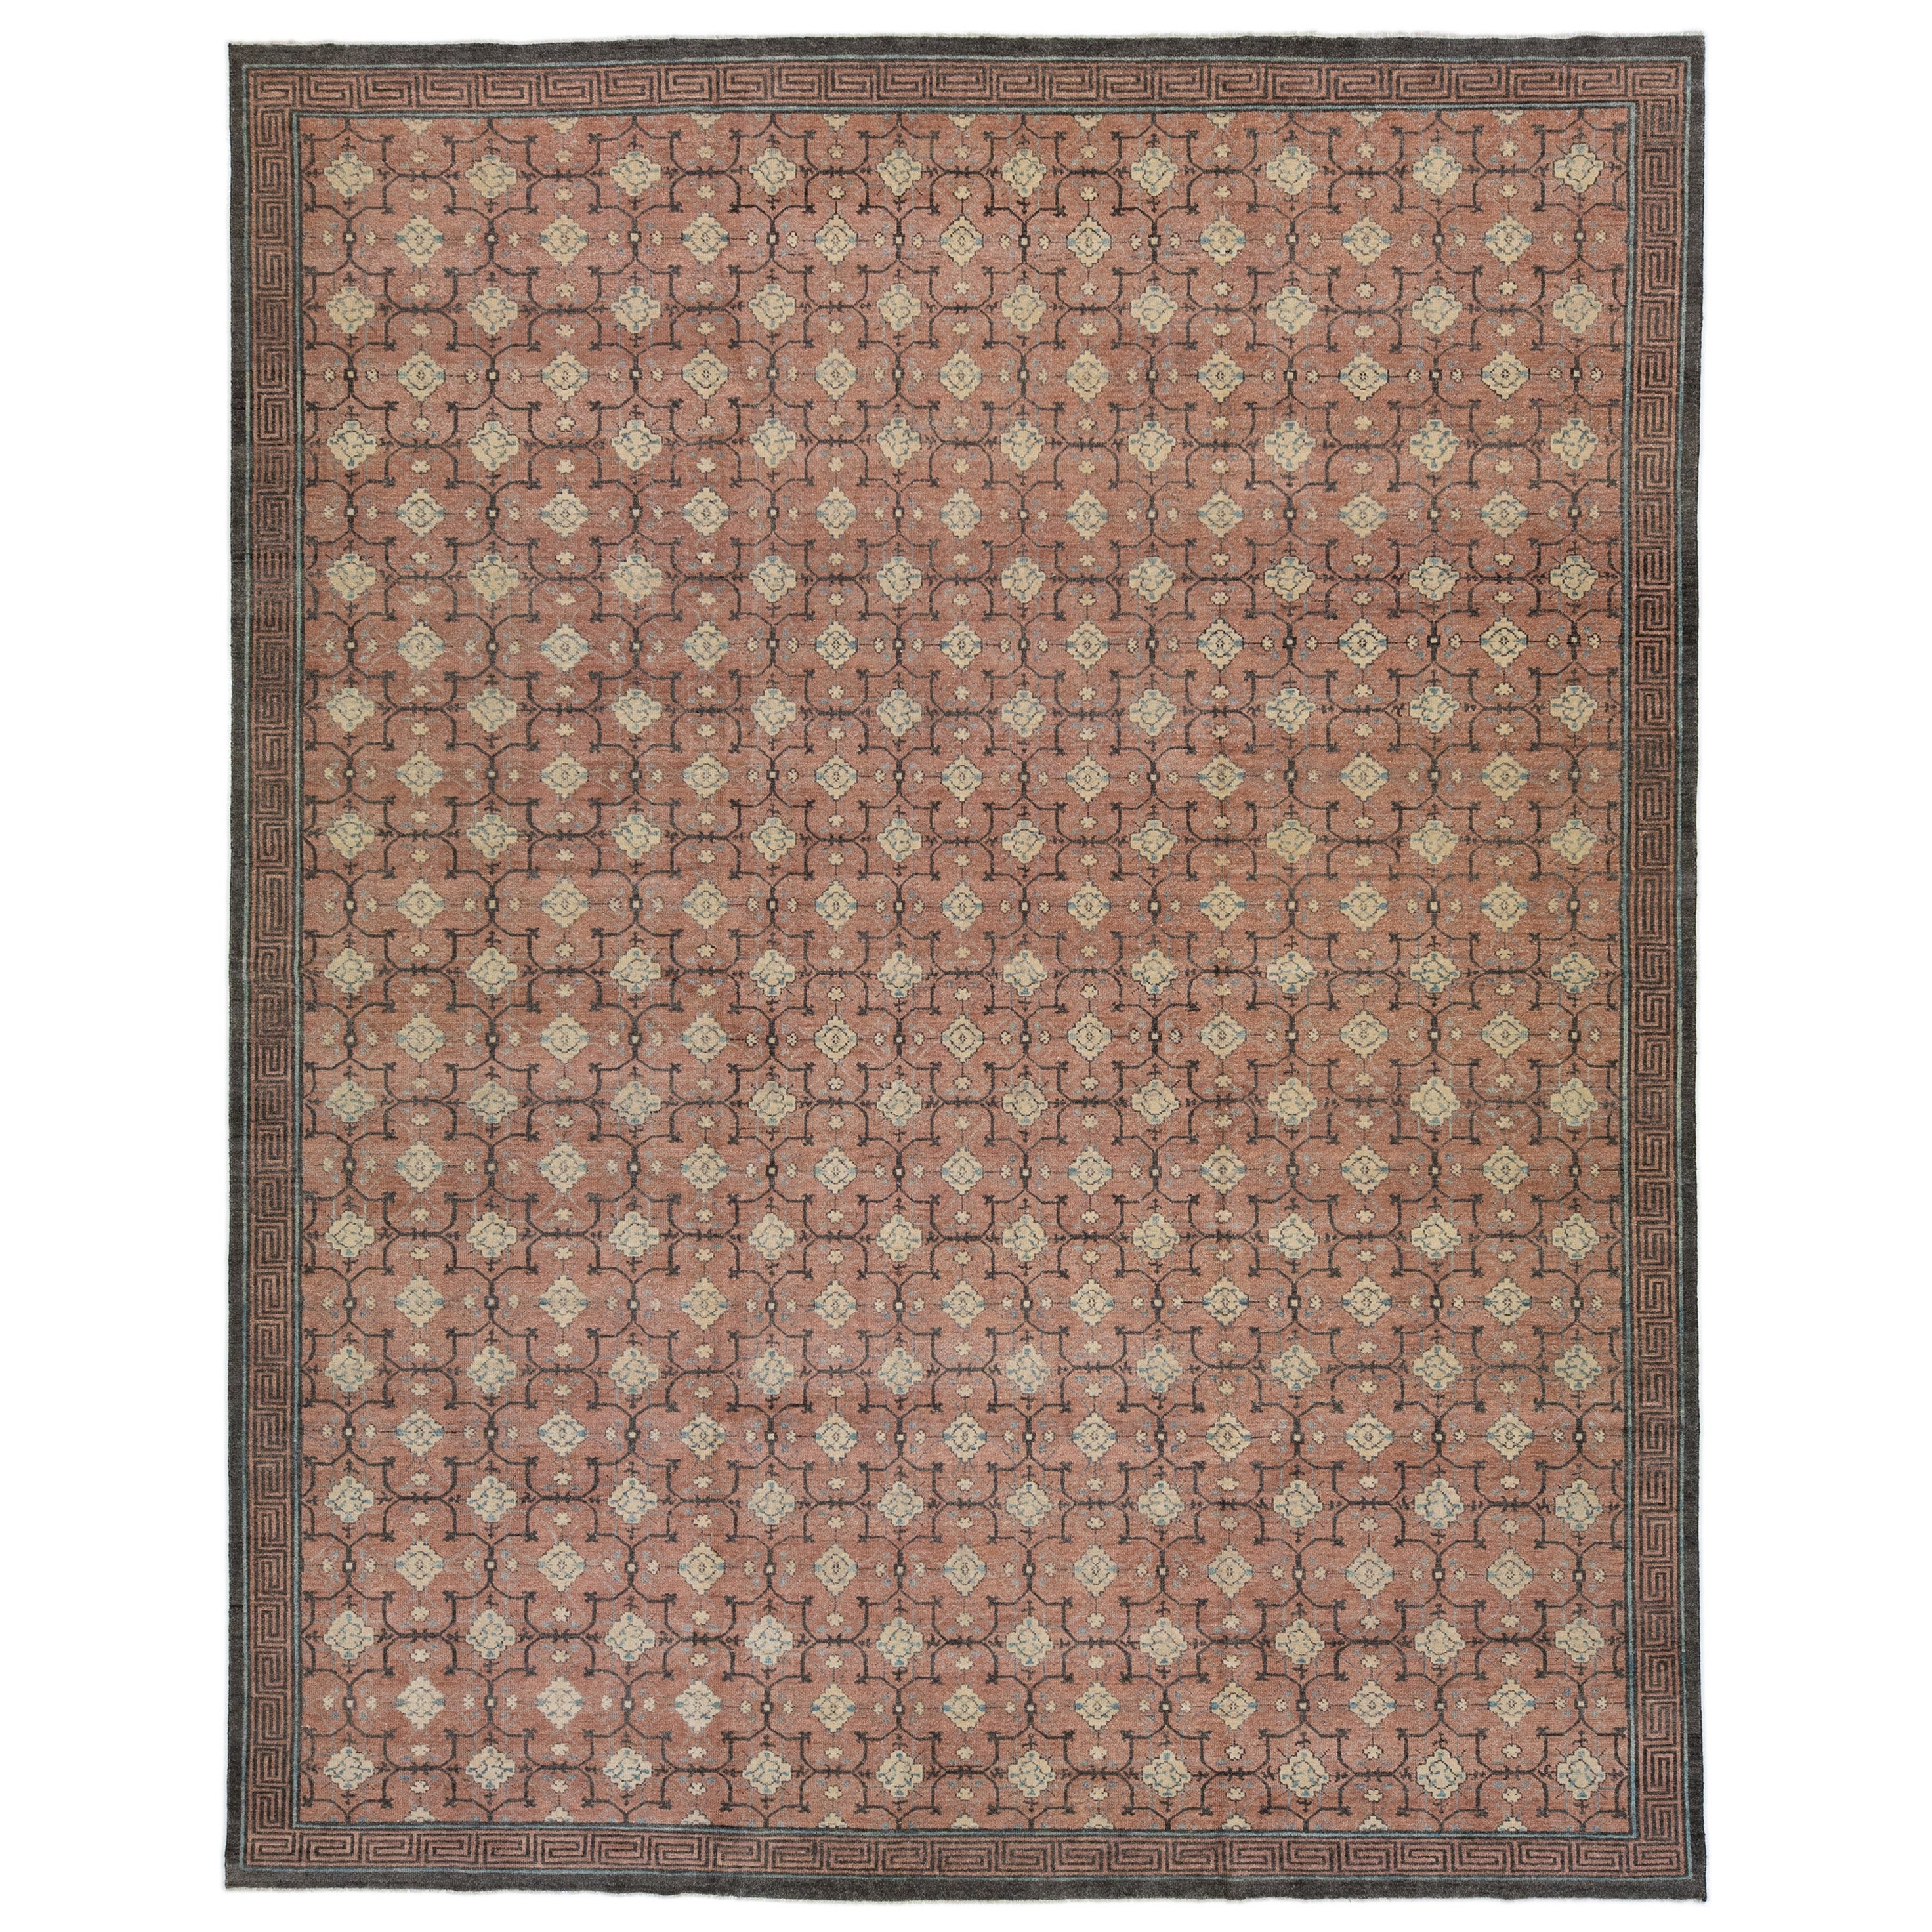 Handmade Khotan Style Modern Wool Rug With Geometric Design In Brown For Sale